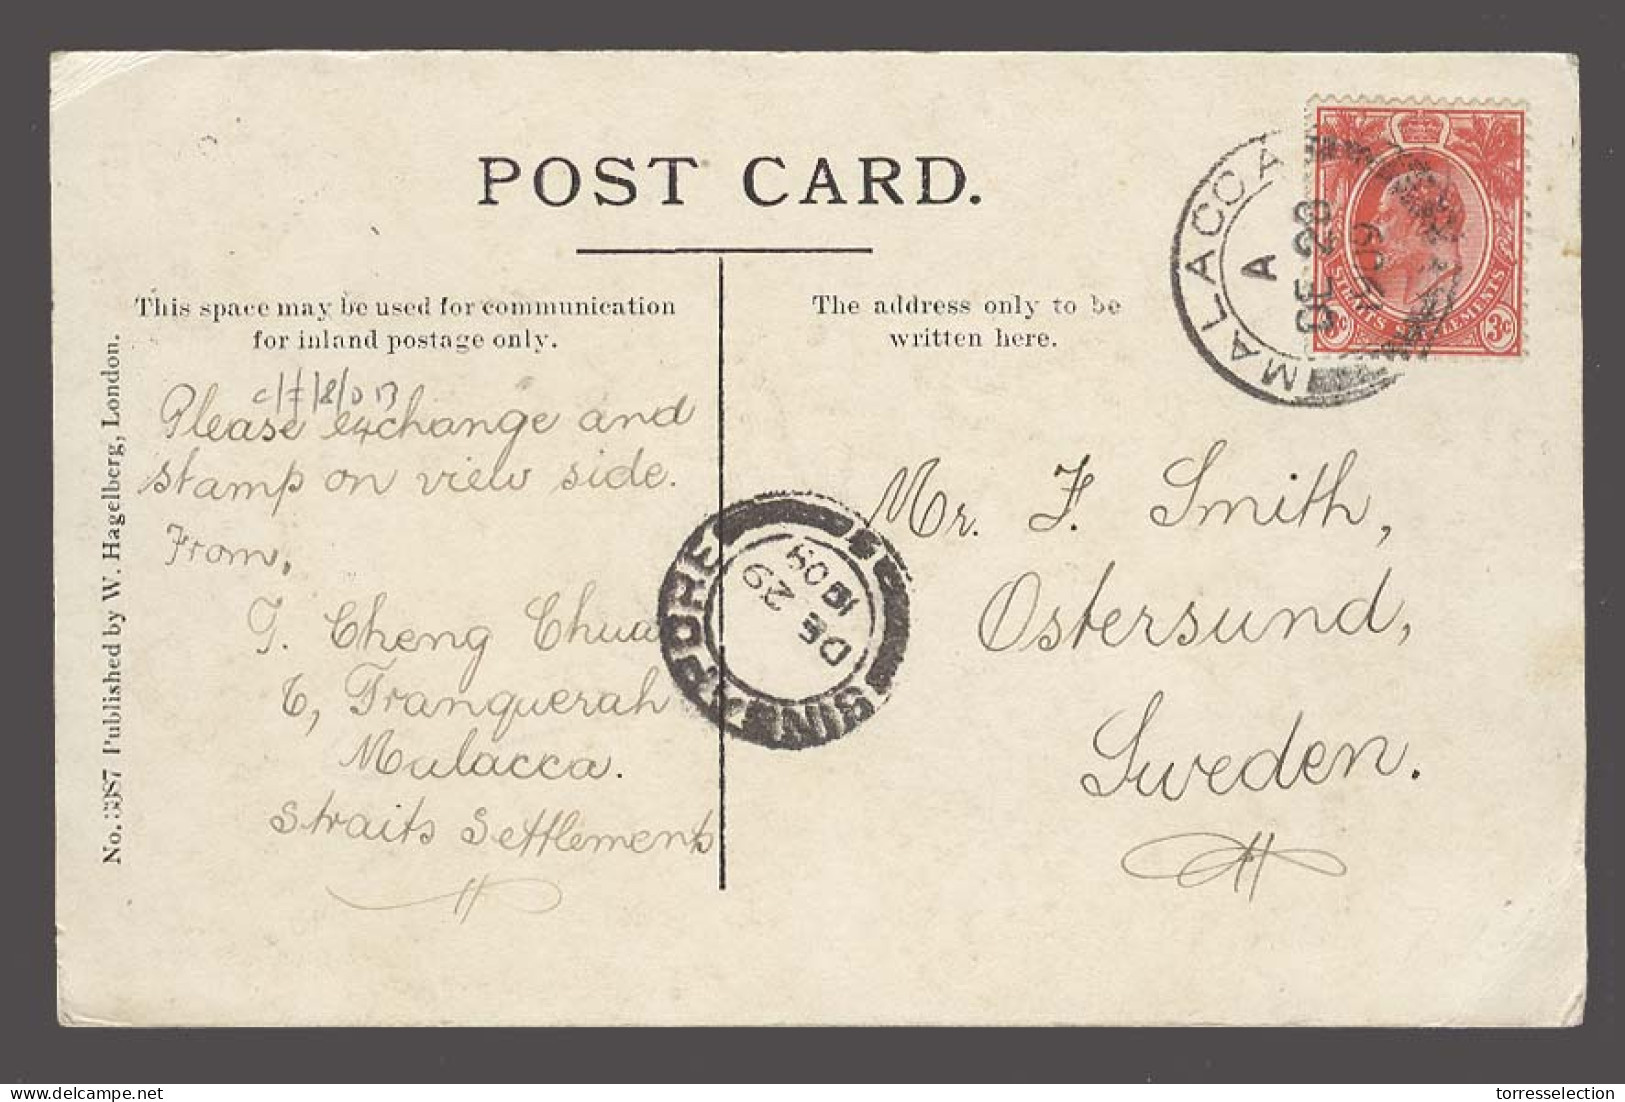 MALAYSIA. 1909 (28 Dec). Malacca - Sweden. Via Singapore (29 Dec). Fkd PPC 3c Stamp. - Malaysia (1964-...)